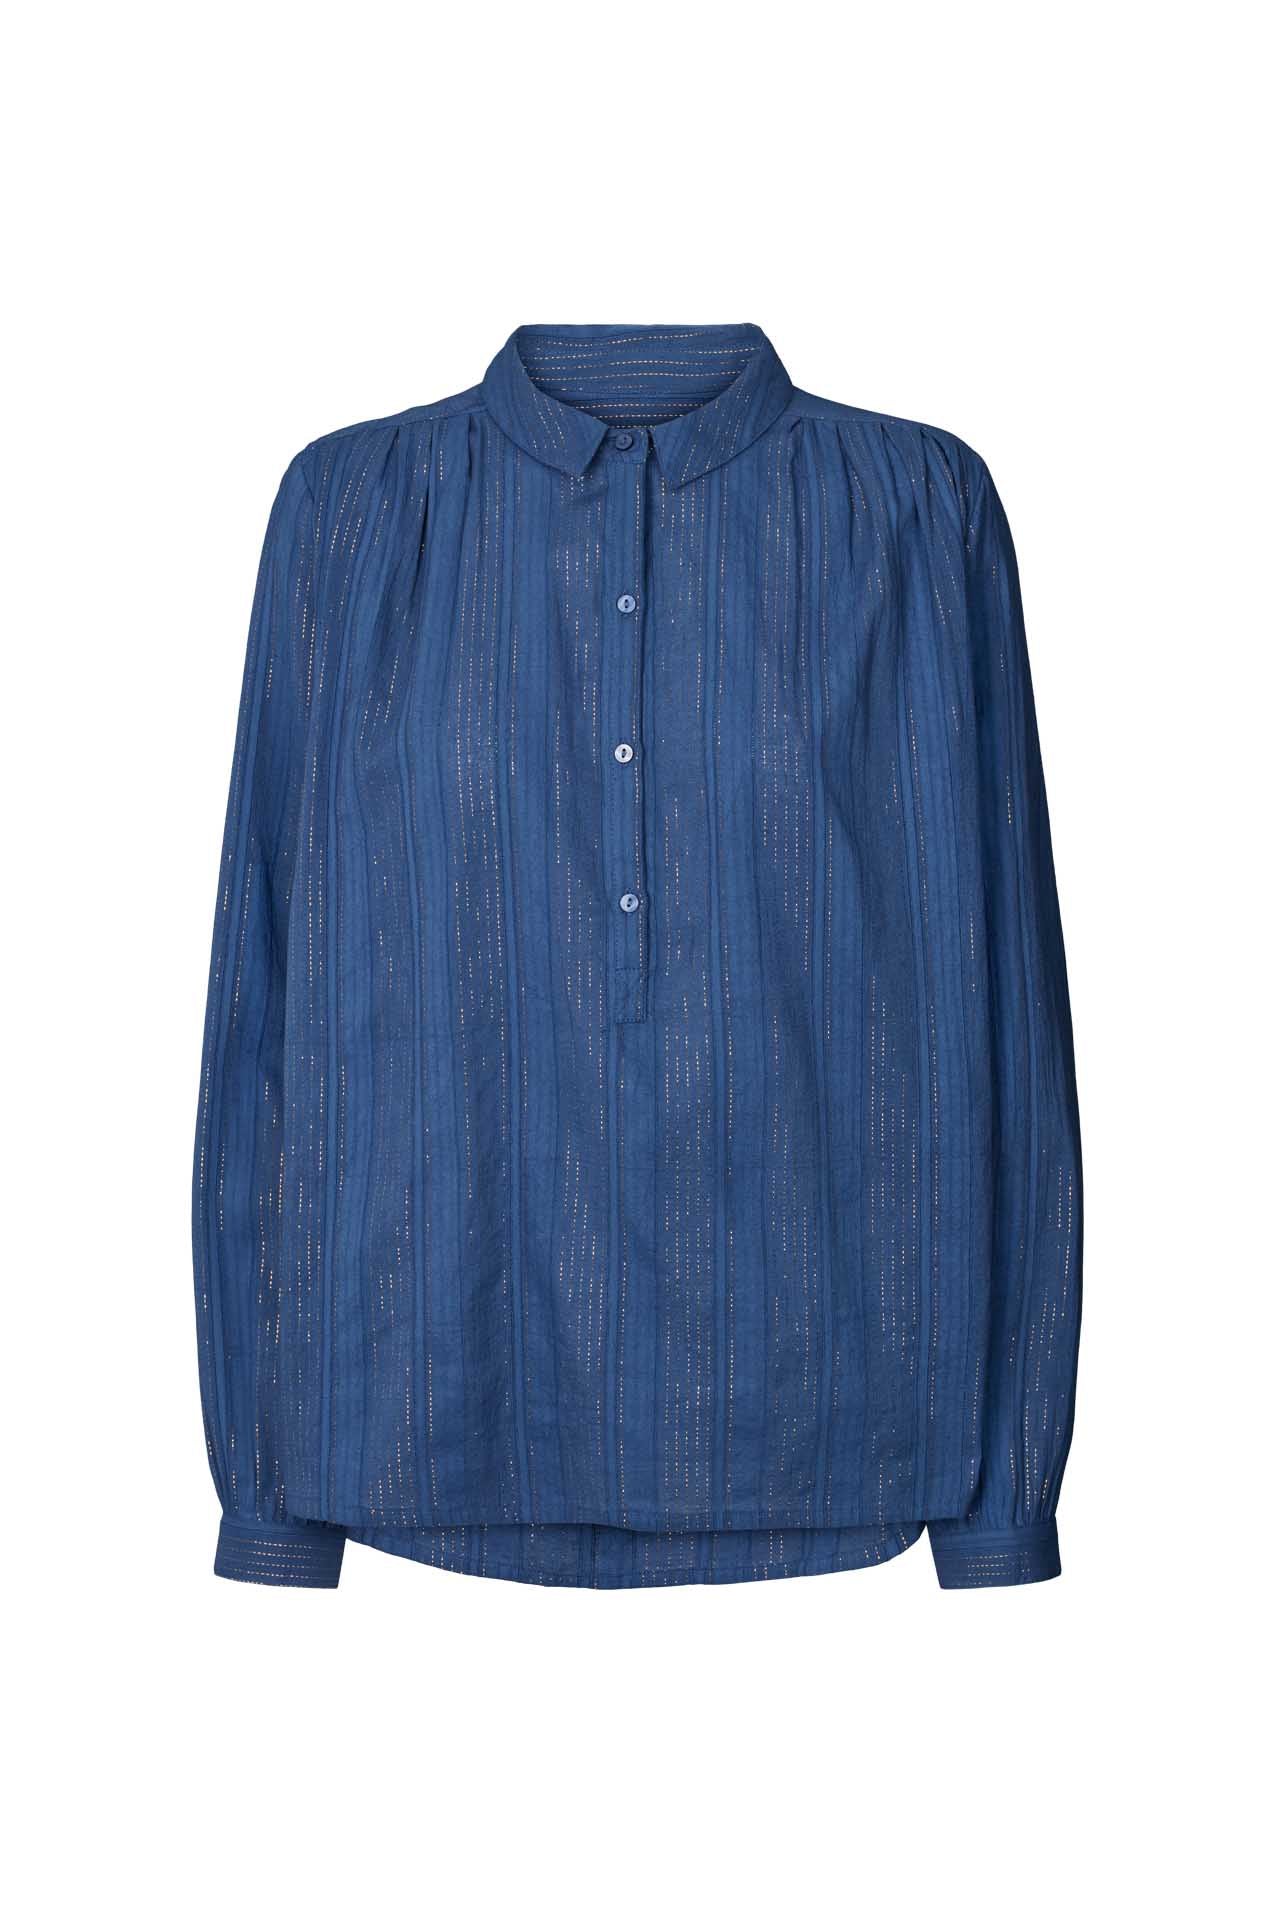 Lollys Laundry Lari Shirt - 29 Dusty Blue